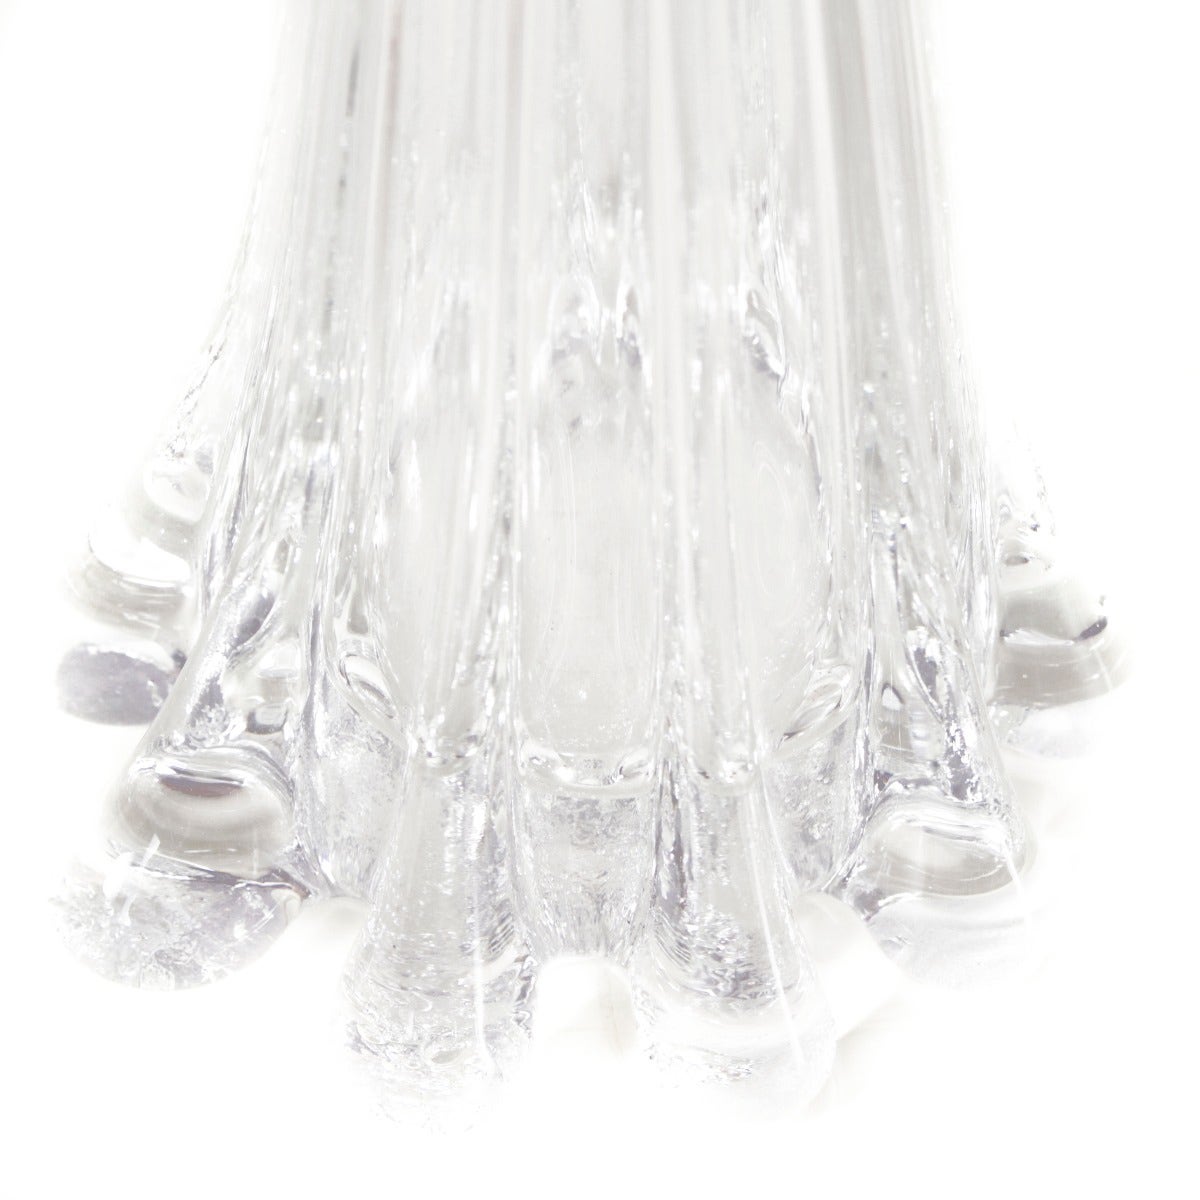 1 Piece Bubble Bottom Eiffel Tower Glass Vase Clear for Wedding Centerpiece, Home Decor